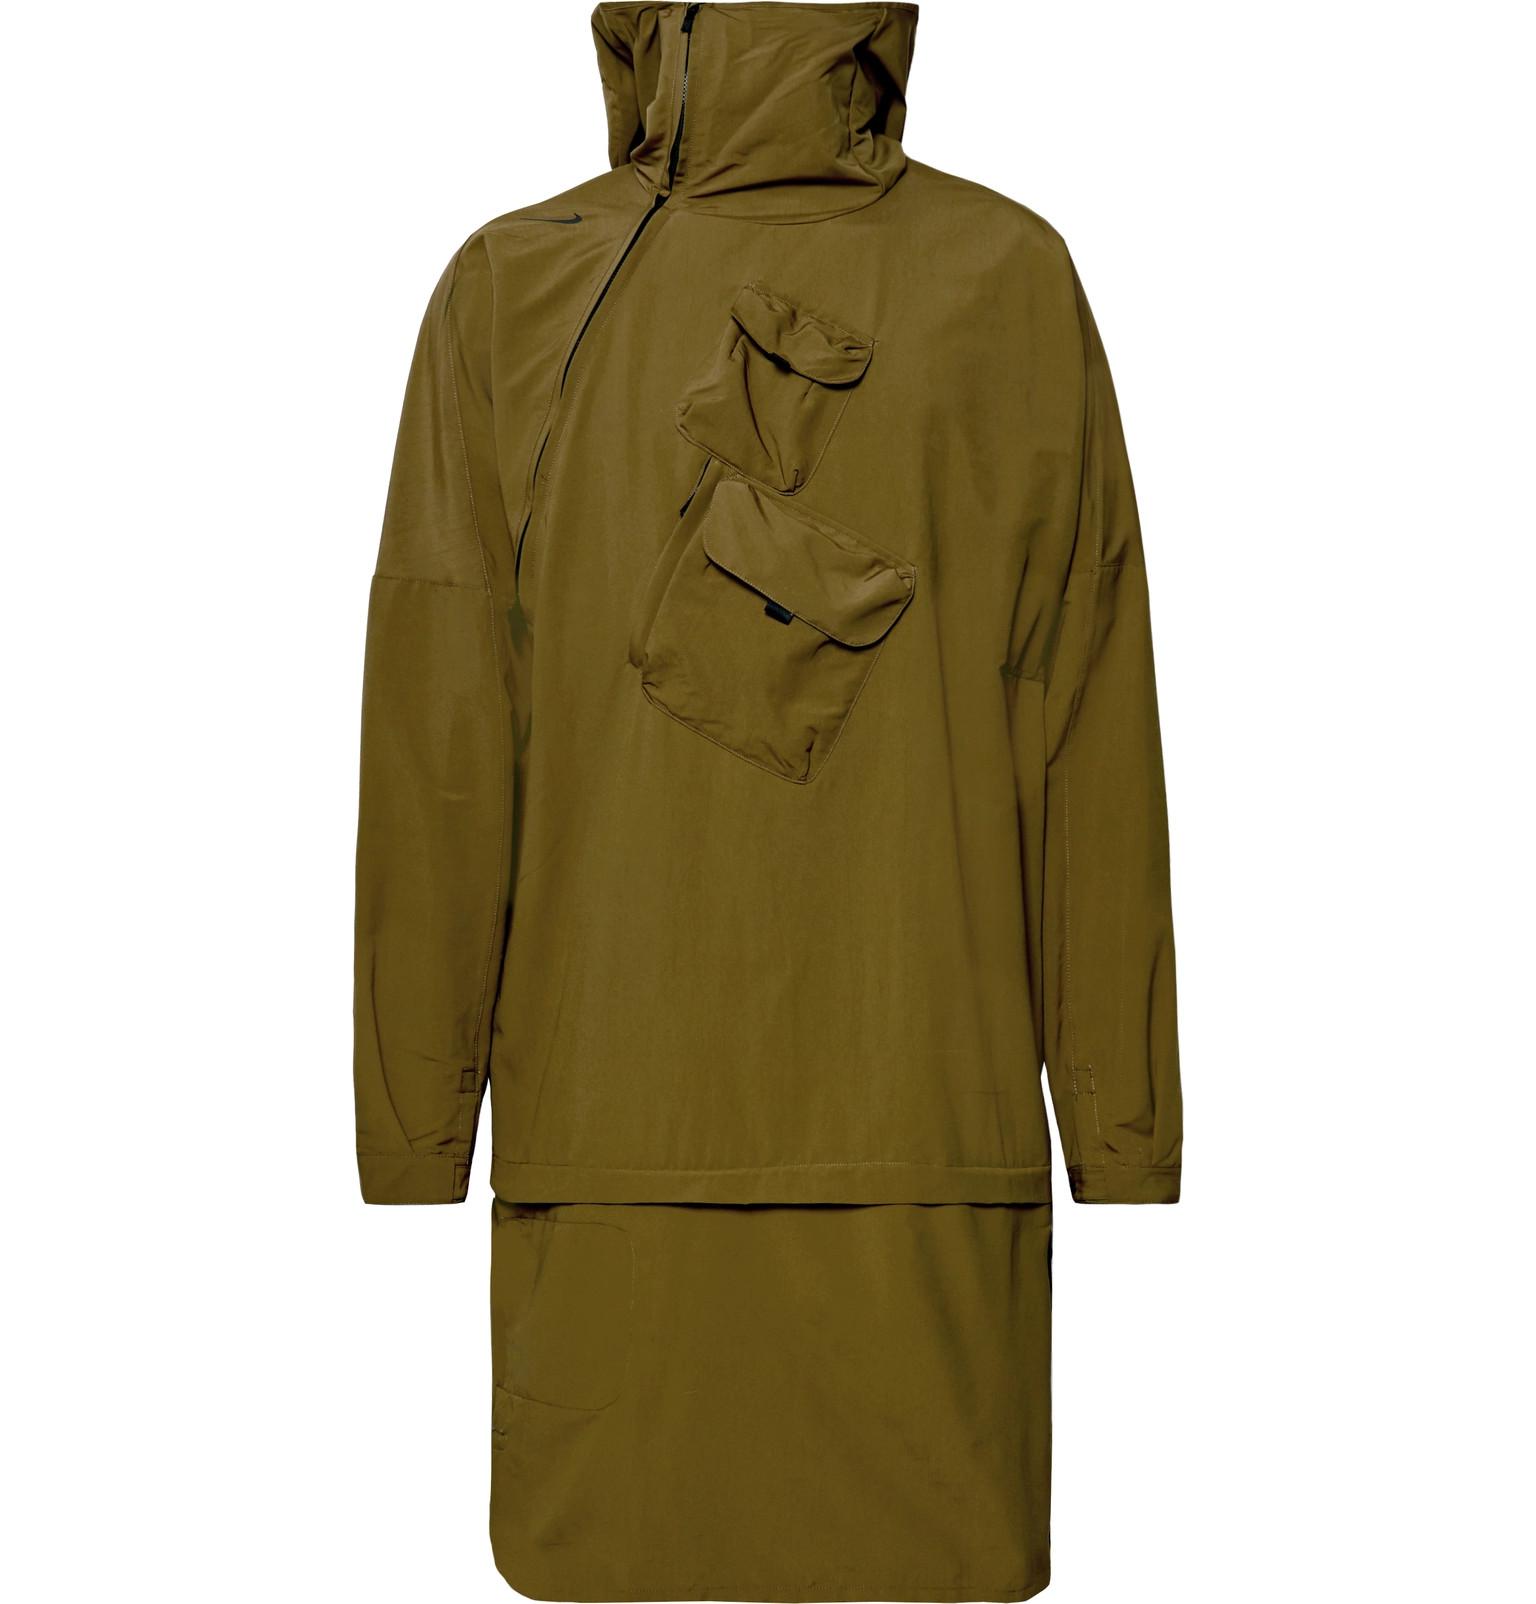 Nike. Menu0027s Green Lab Aae 2.0 Convertible Shell Hooded Jacket